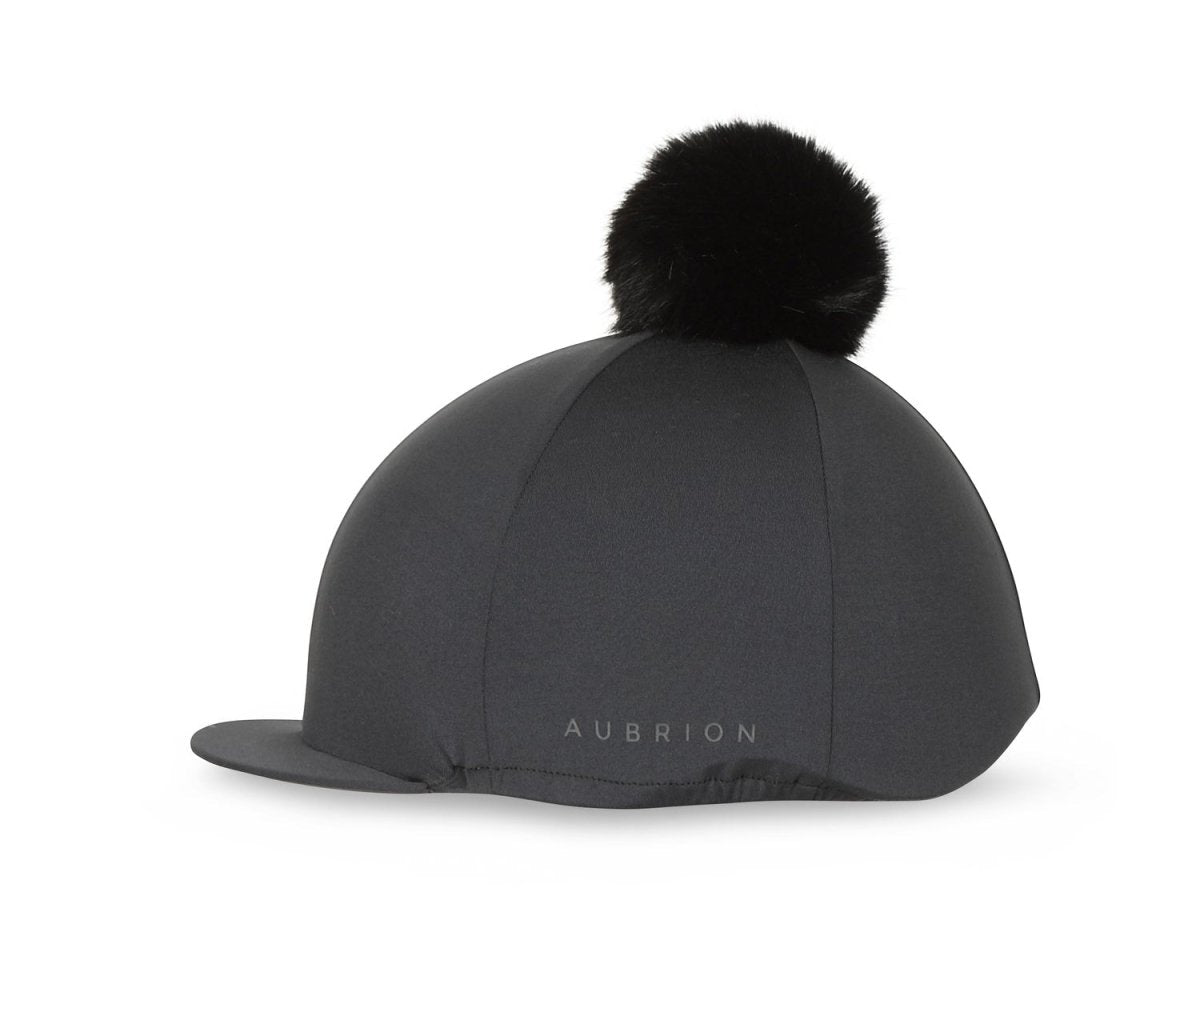 Aubrion SS24 Pom Pom Hat Cover - Black - One Size